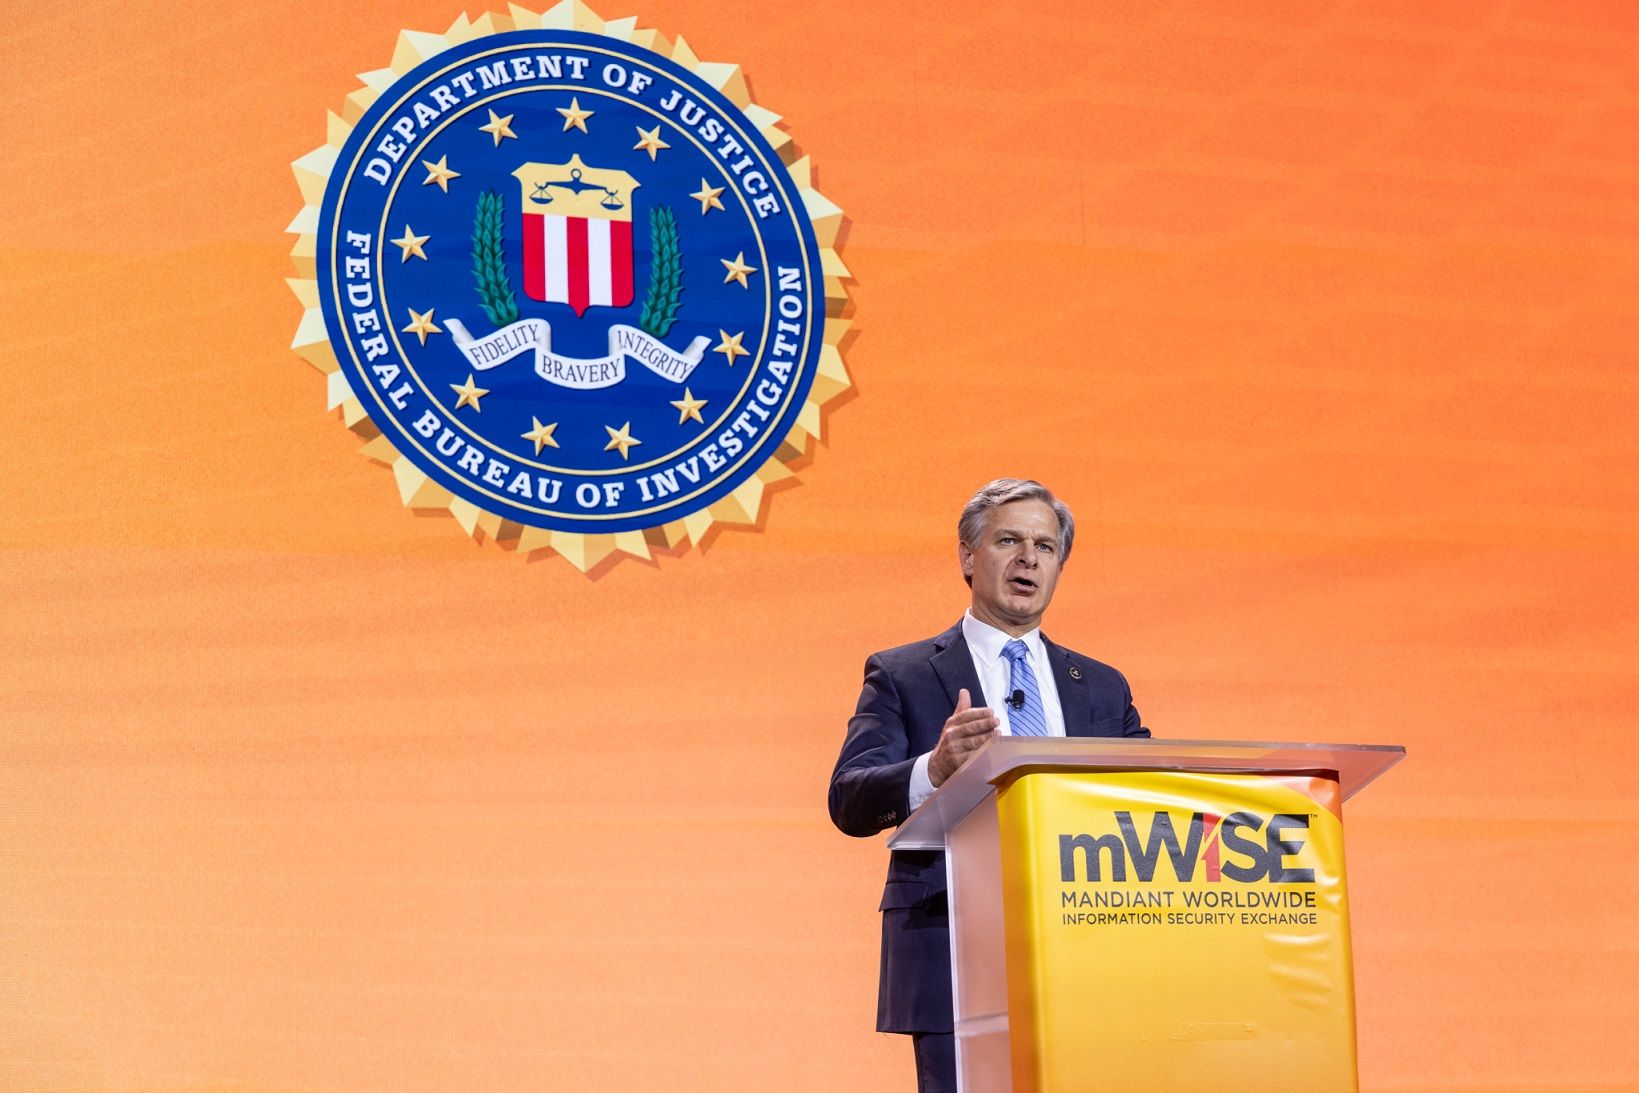 2023 09 18 MWISE FBI size 2 - [Weekend Briefing] Security mindset